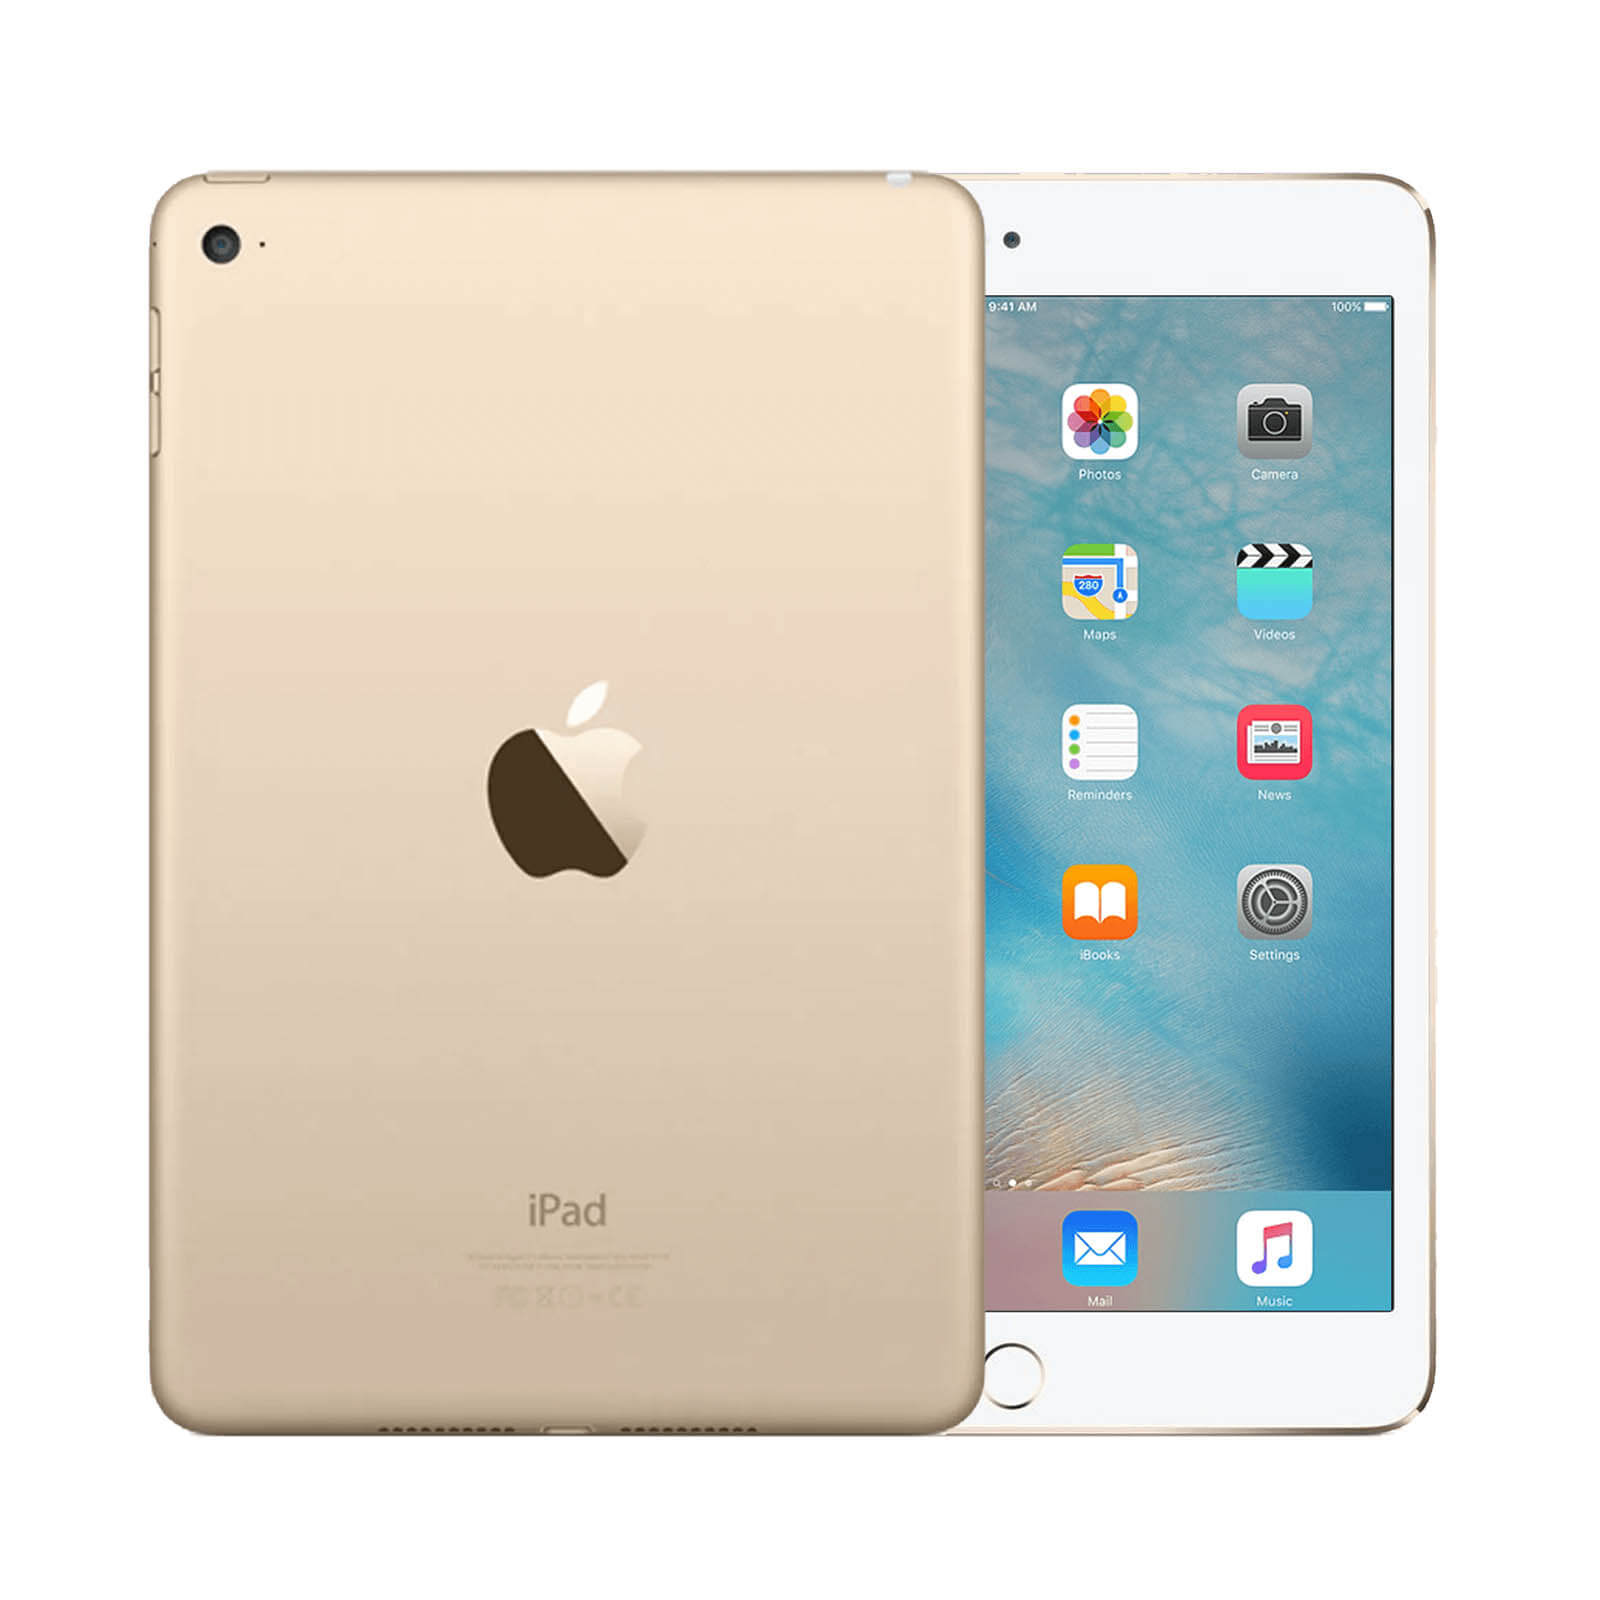 iPad Mini 4 128GB WiFi - Gold - Excellent